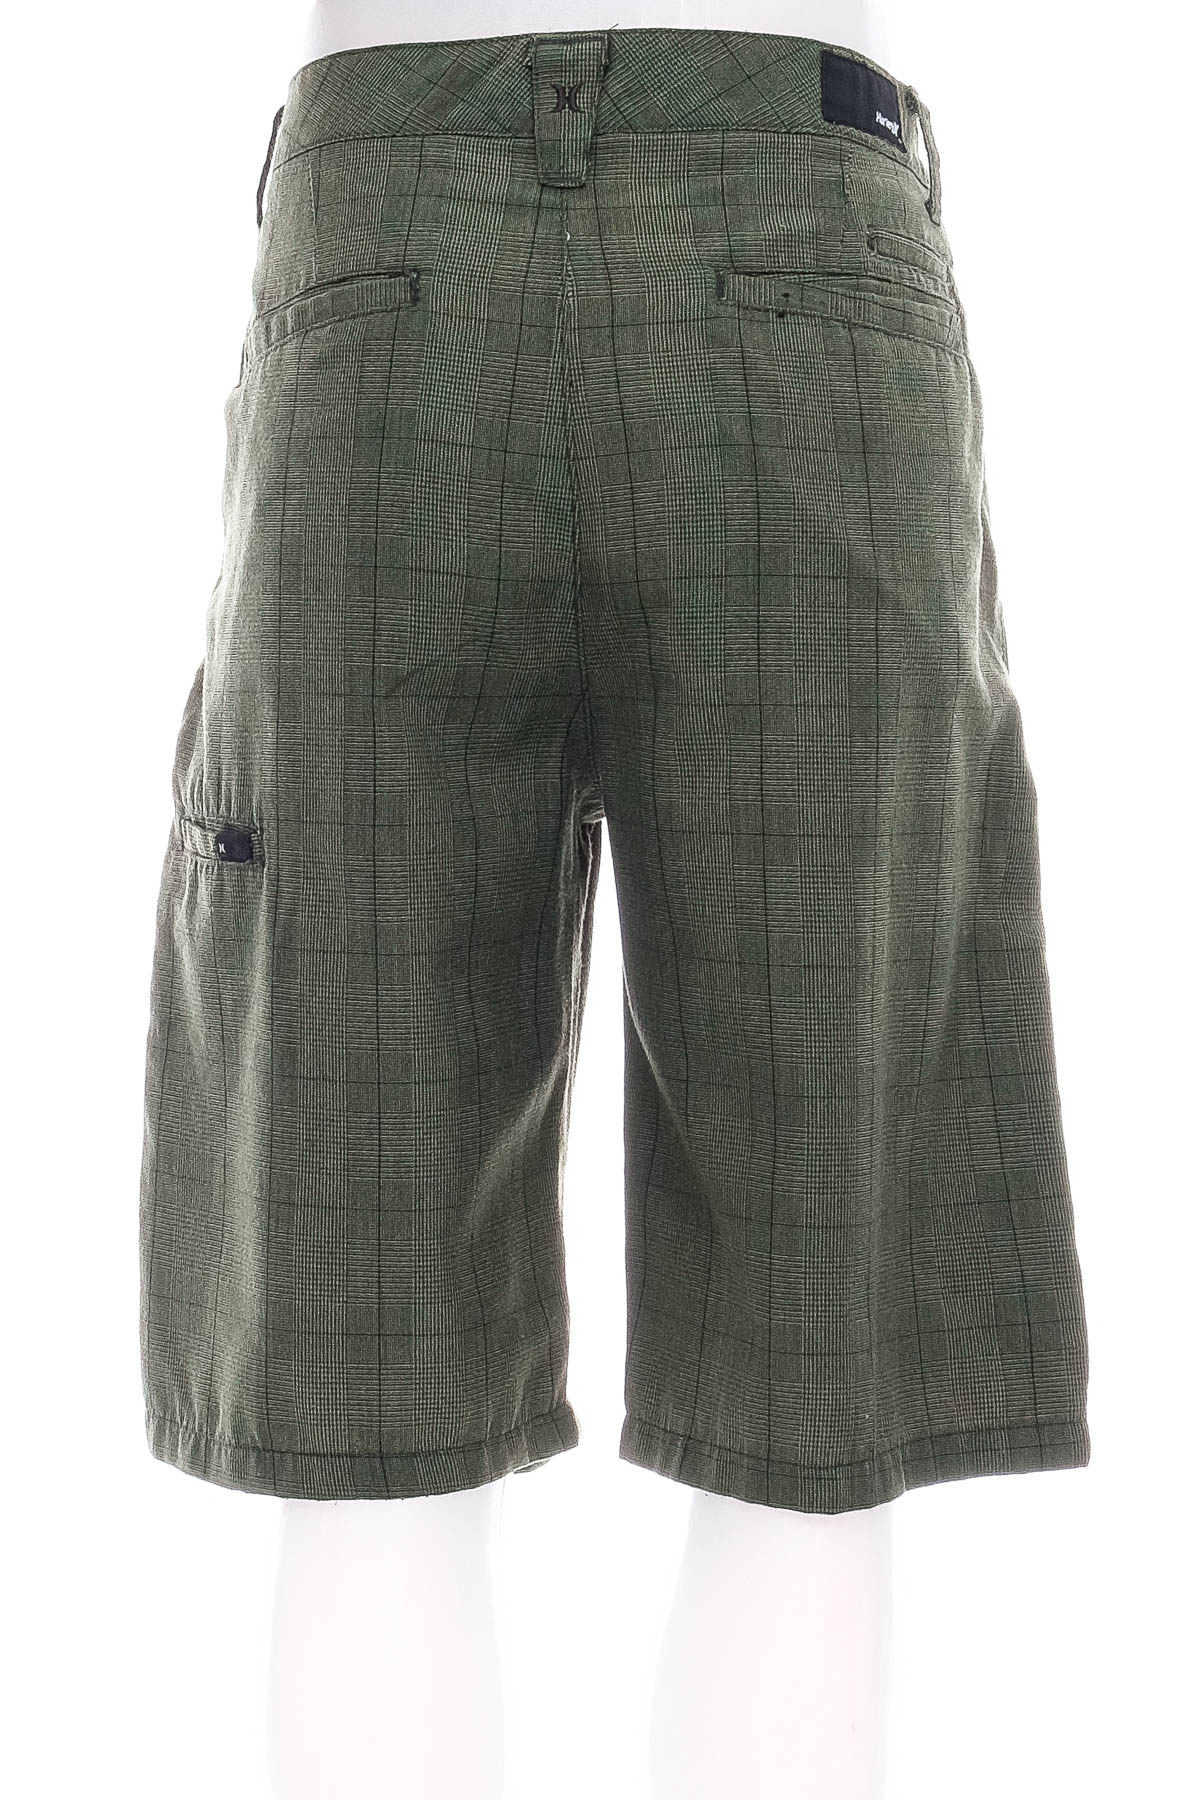 Men's shorts - Hurley - 1